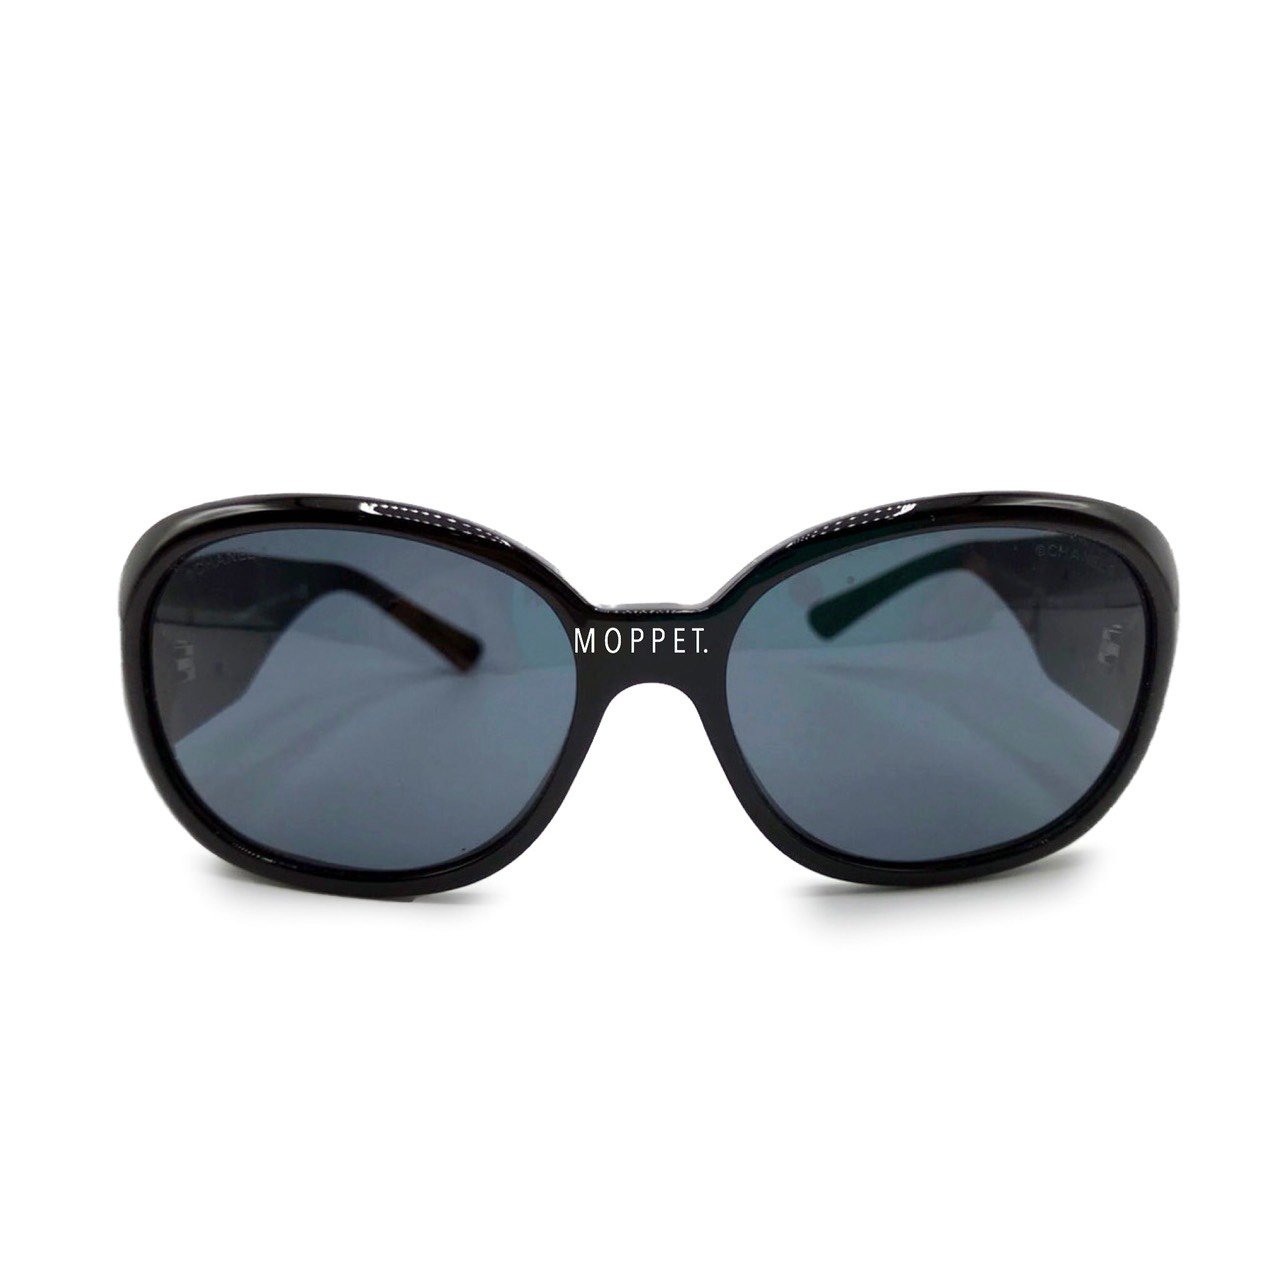 Used Chanel Sunglasses in Black/Black Lens